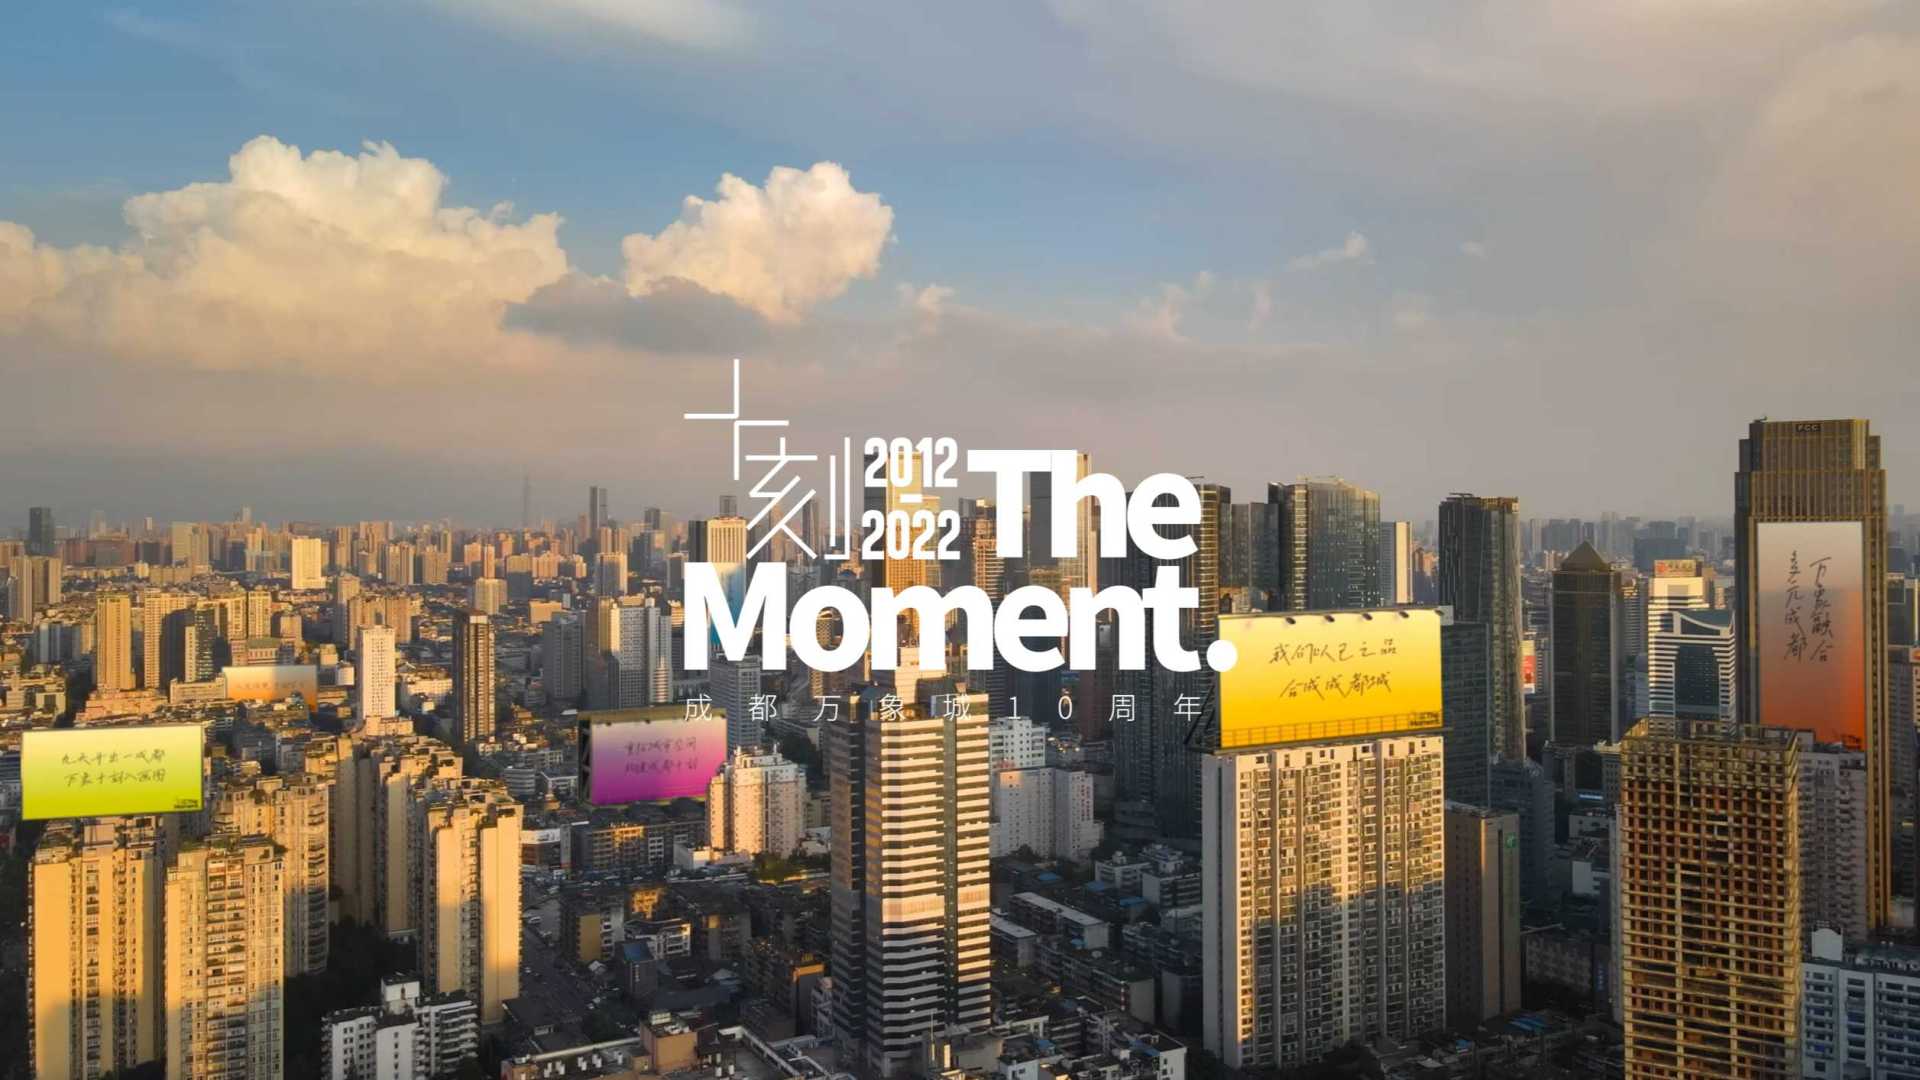 The Moment丨成都万象城十周年人物篇